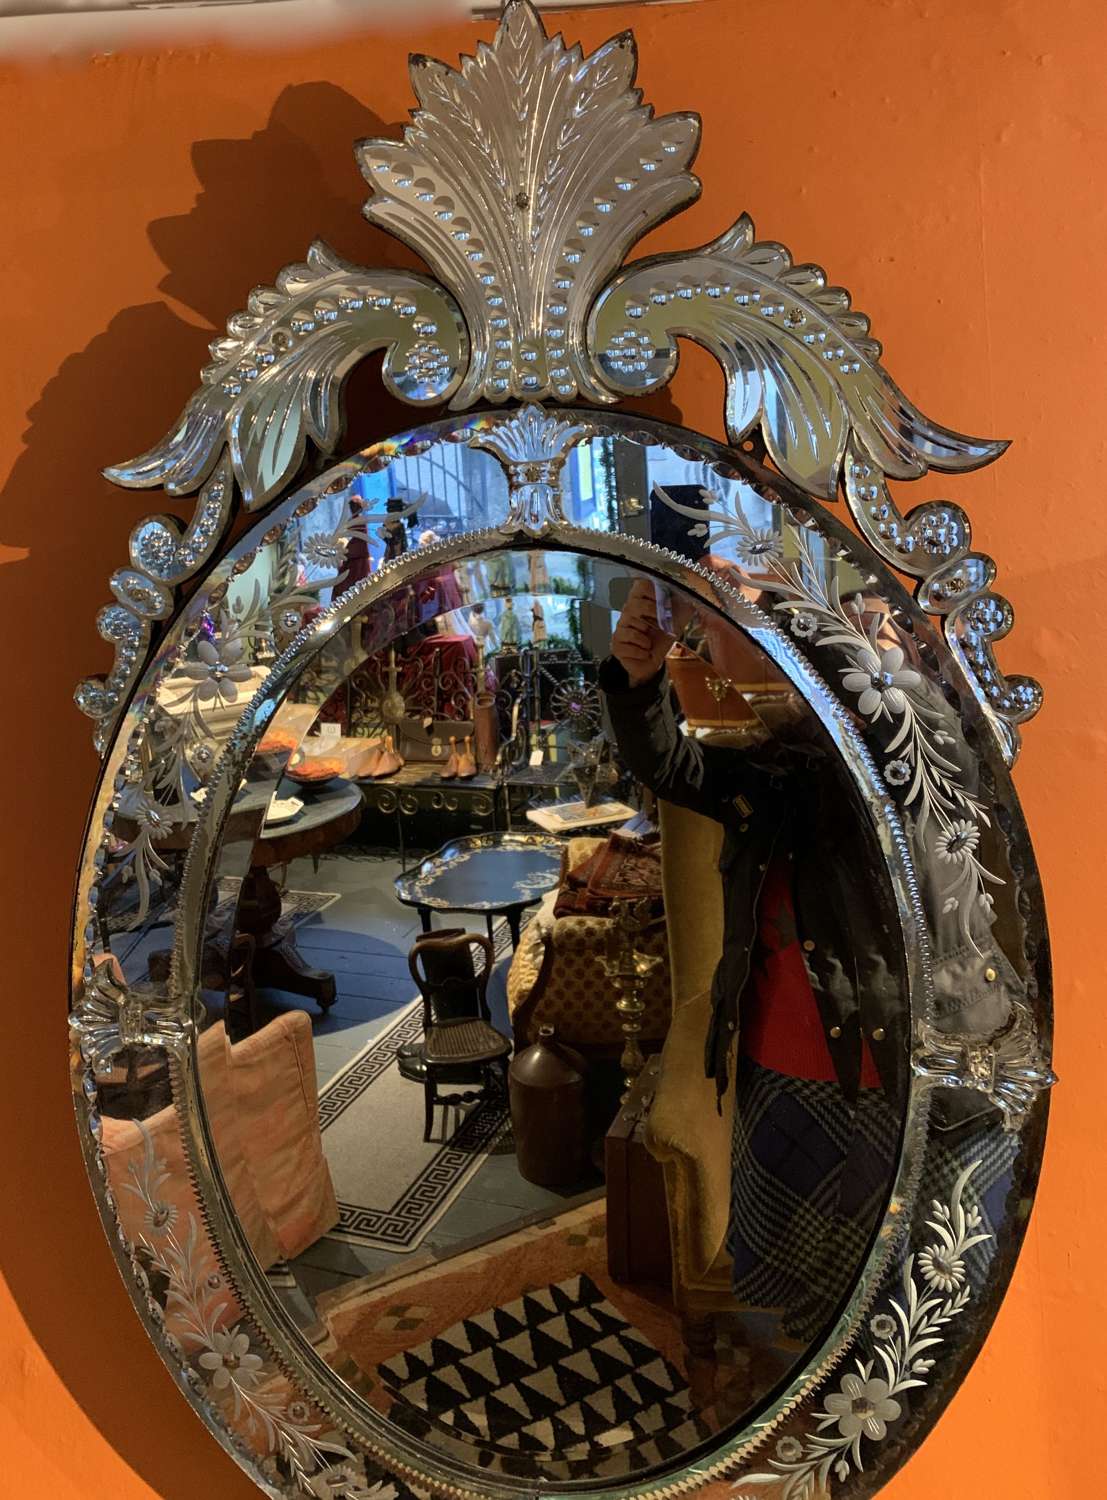 Antique Venetian Wall Mirror